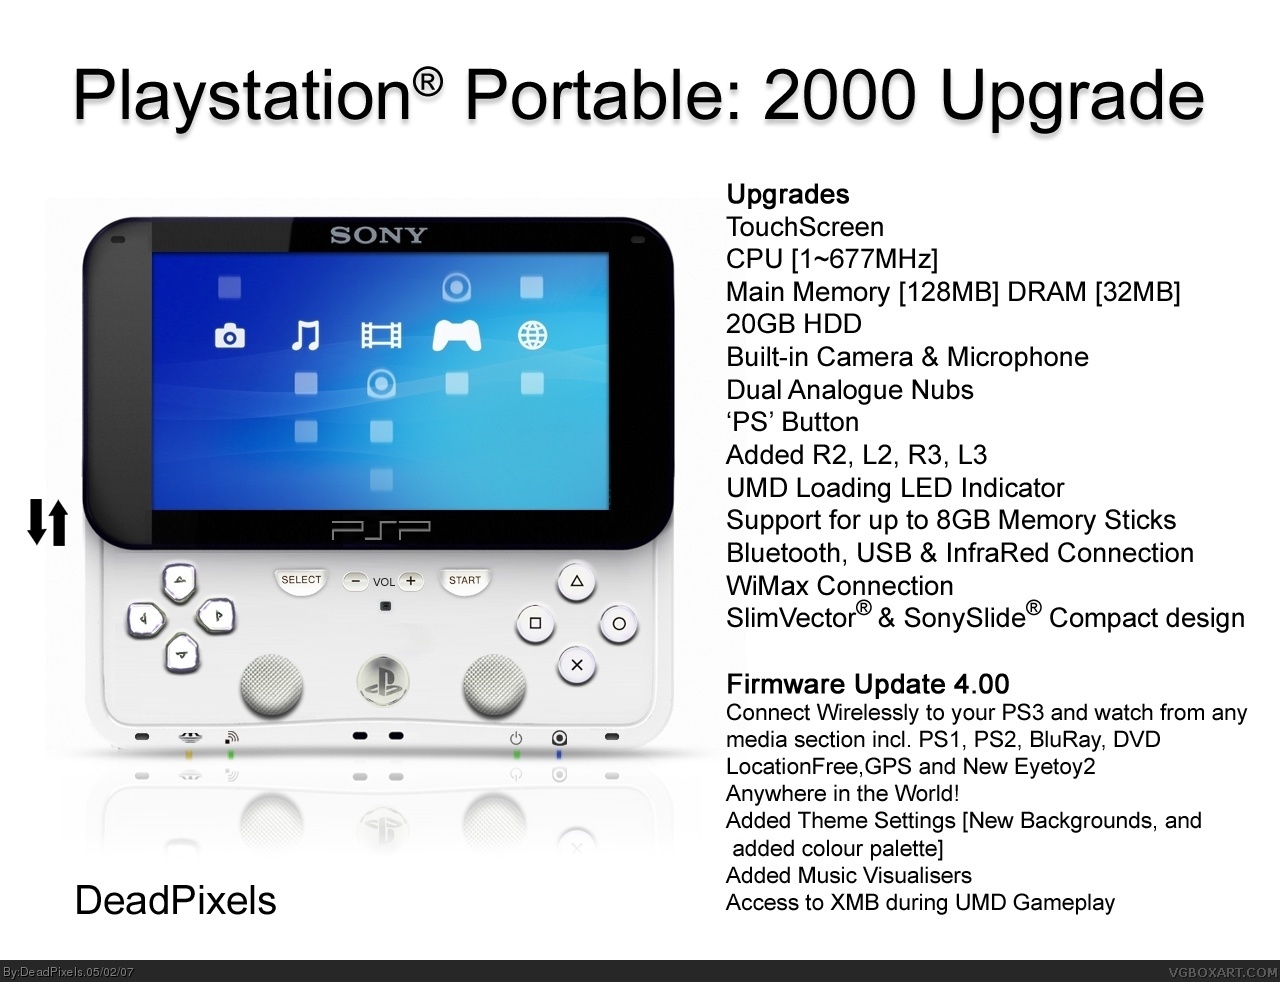 Playstation Portable Model Upgrade box cover